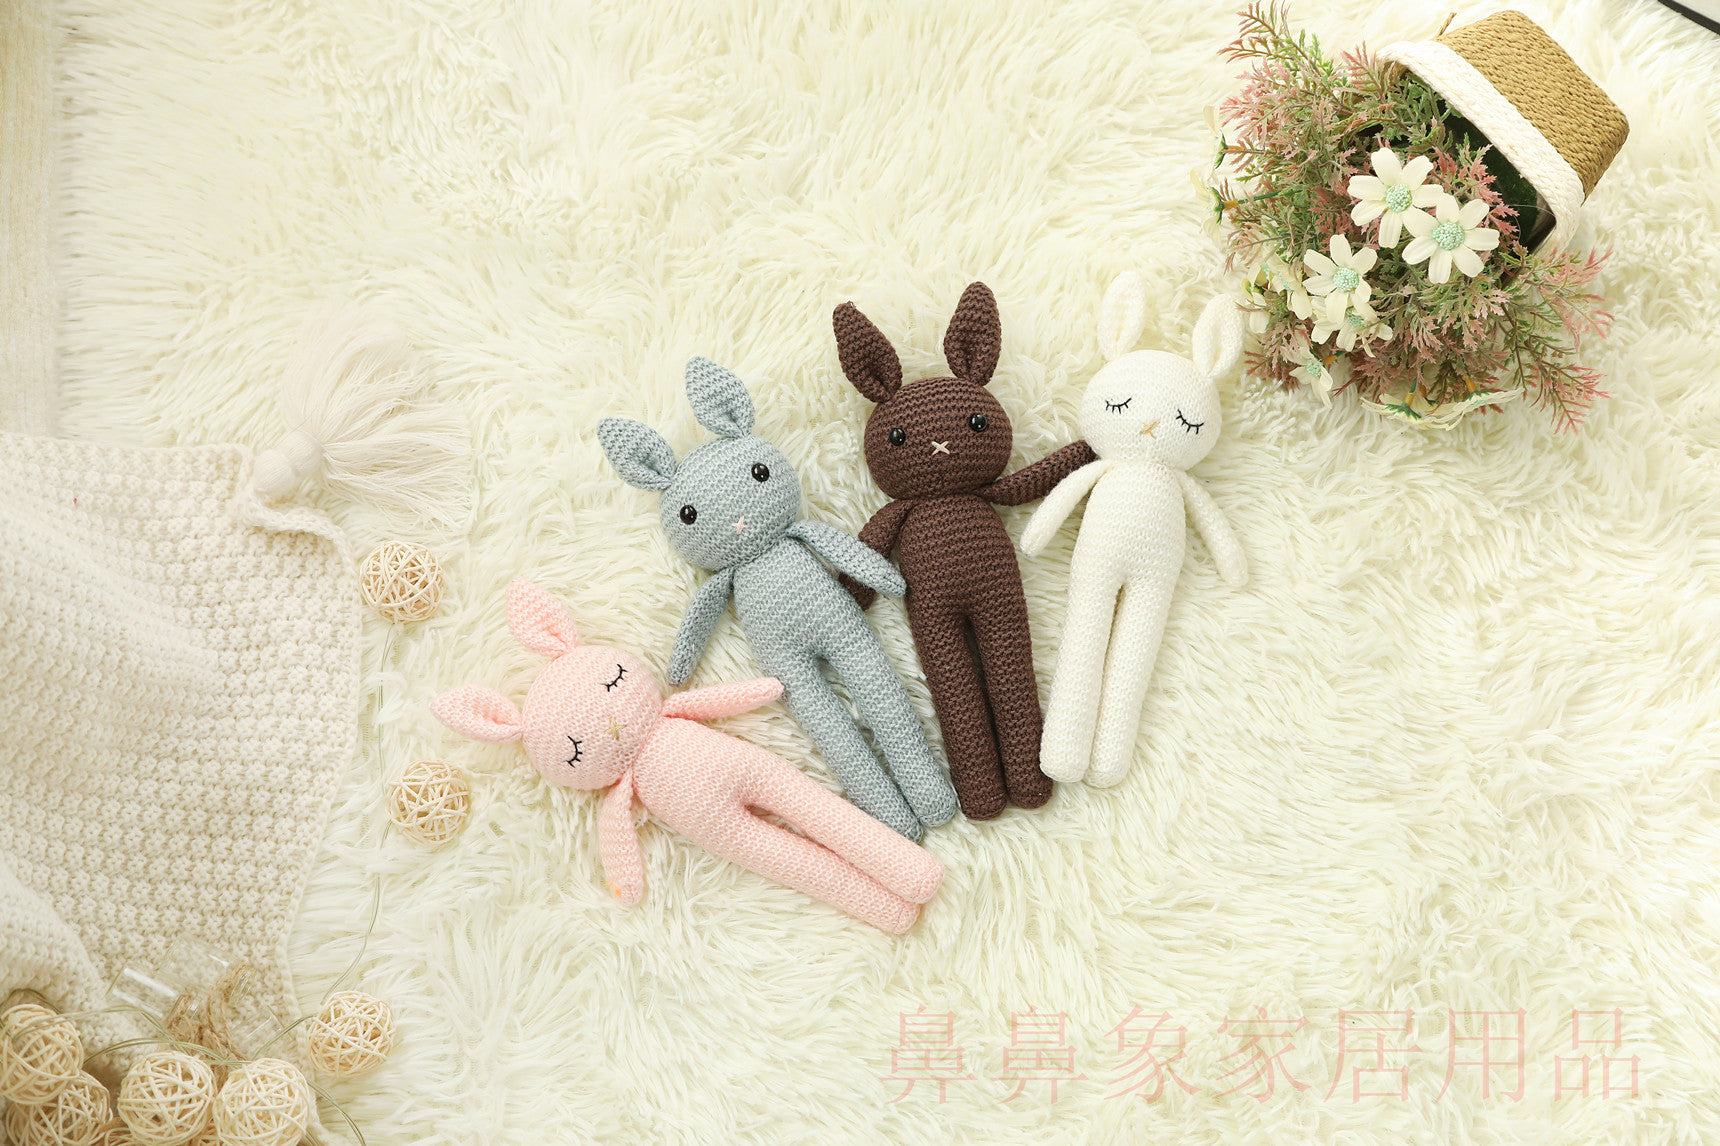 New Handmade Rabbit Crochet Wool Doll Animal Stuffed Plush Toy Baby Soothing Baby Sleeping Plush Toy Gifts For Kids Birthday